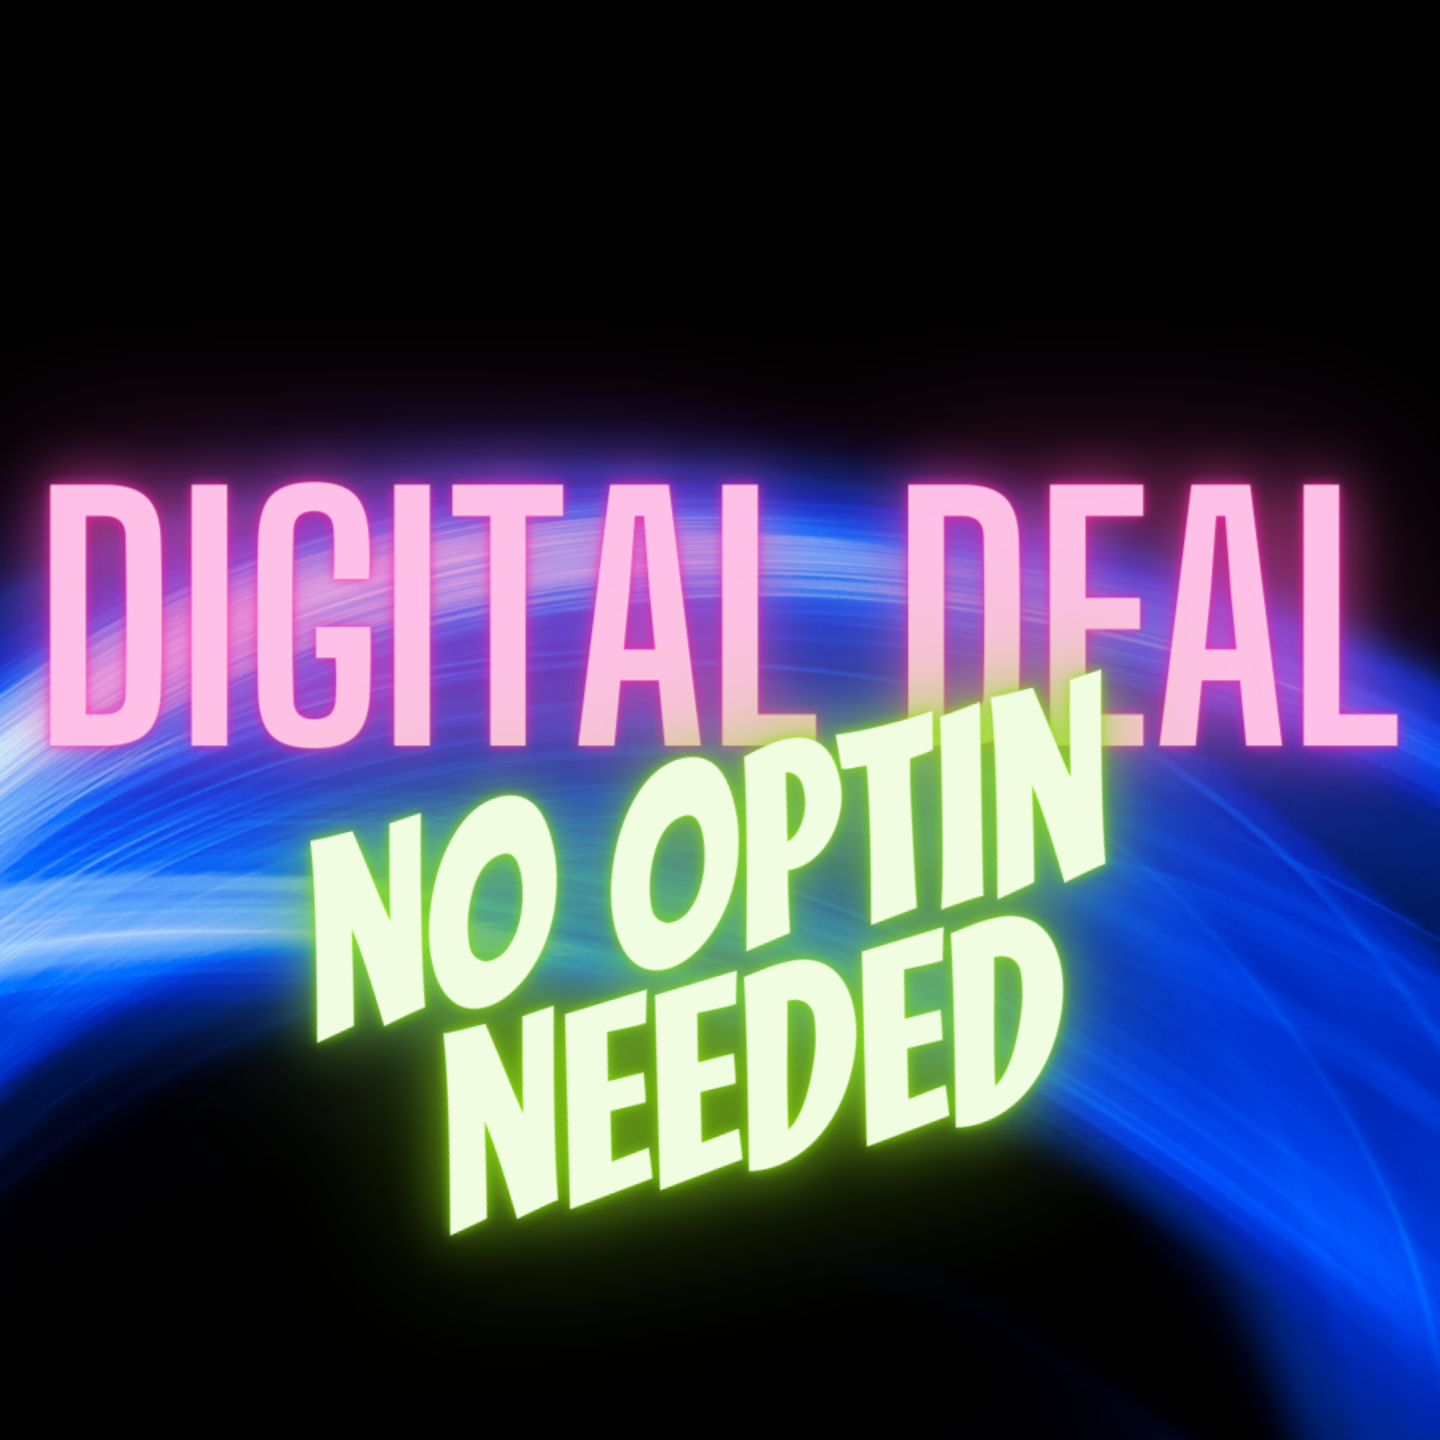 Digital Deal